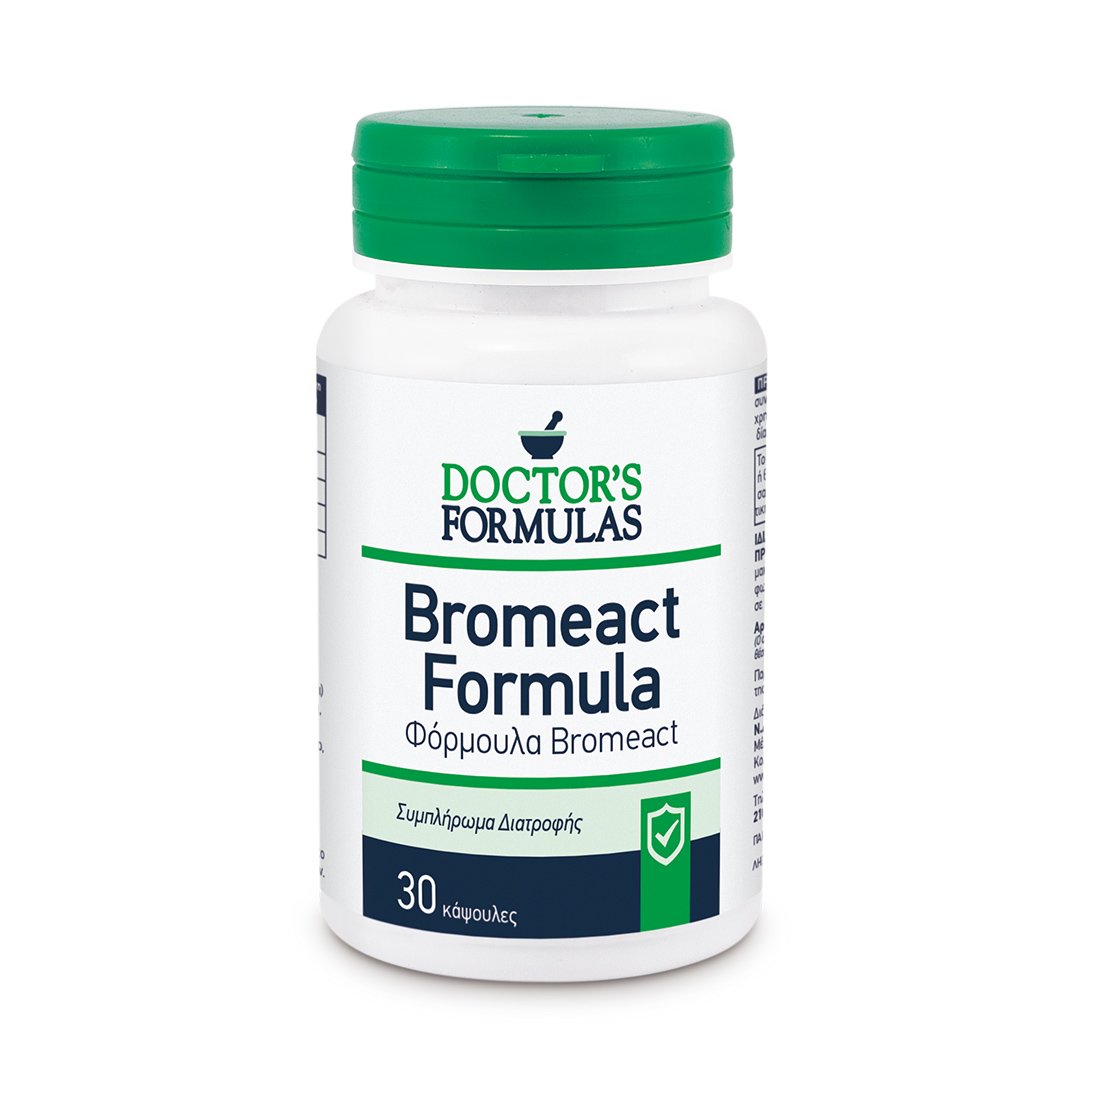 Bromeact 30caps – Doctor’s Formulas,Συμπλήρωμα Διατροφής που Συμβάλλει στη Φυσιολογική Λειτουργία του Ανοσοποιητικού Συστήματος